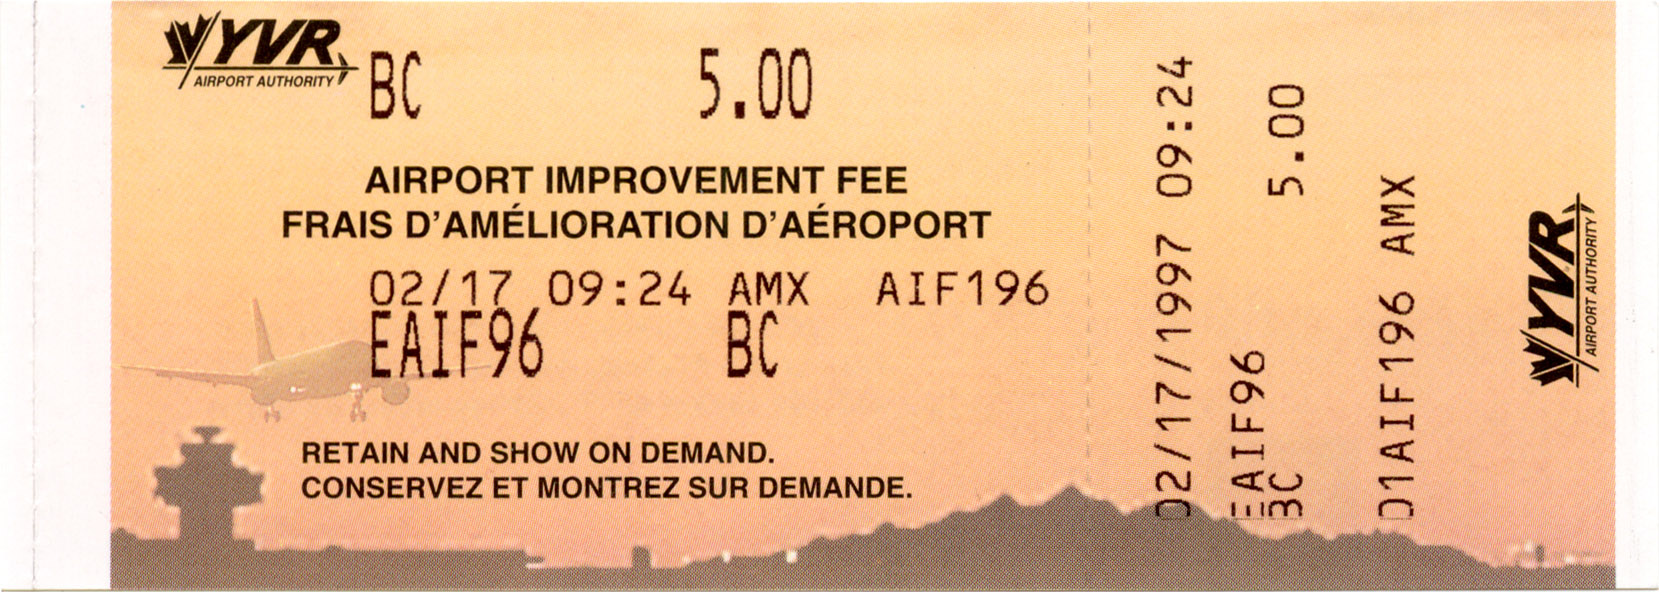 Airport Departure Fee Ticket - Vancouver International Airport